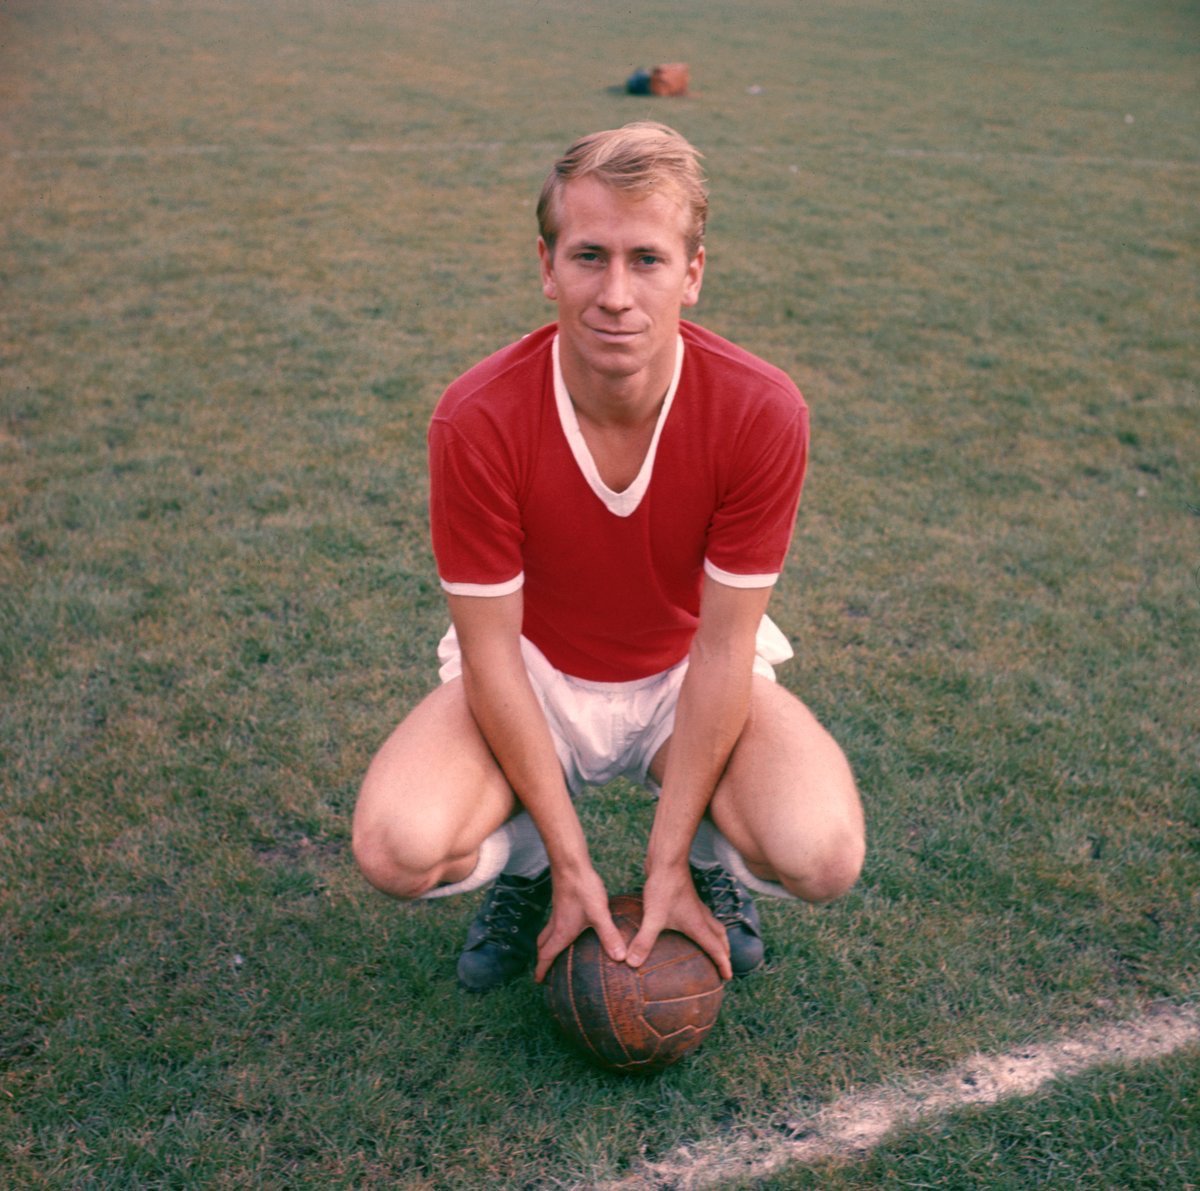 Happy 80th birthday, Sir Bobby Charlton. 

Games - 758  
Goals - 249
Trophies - 12 
 
Legend. 